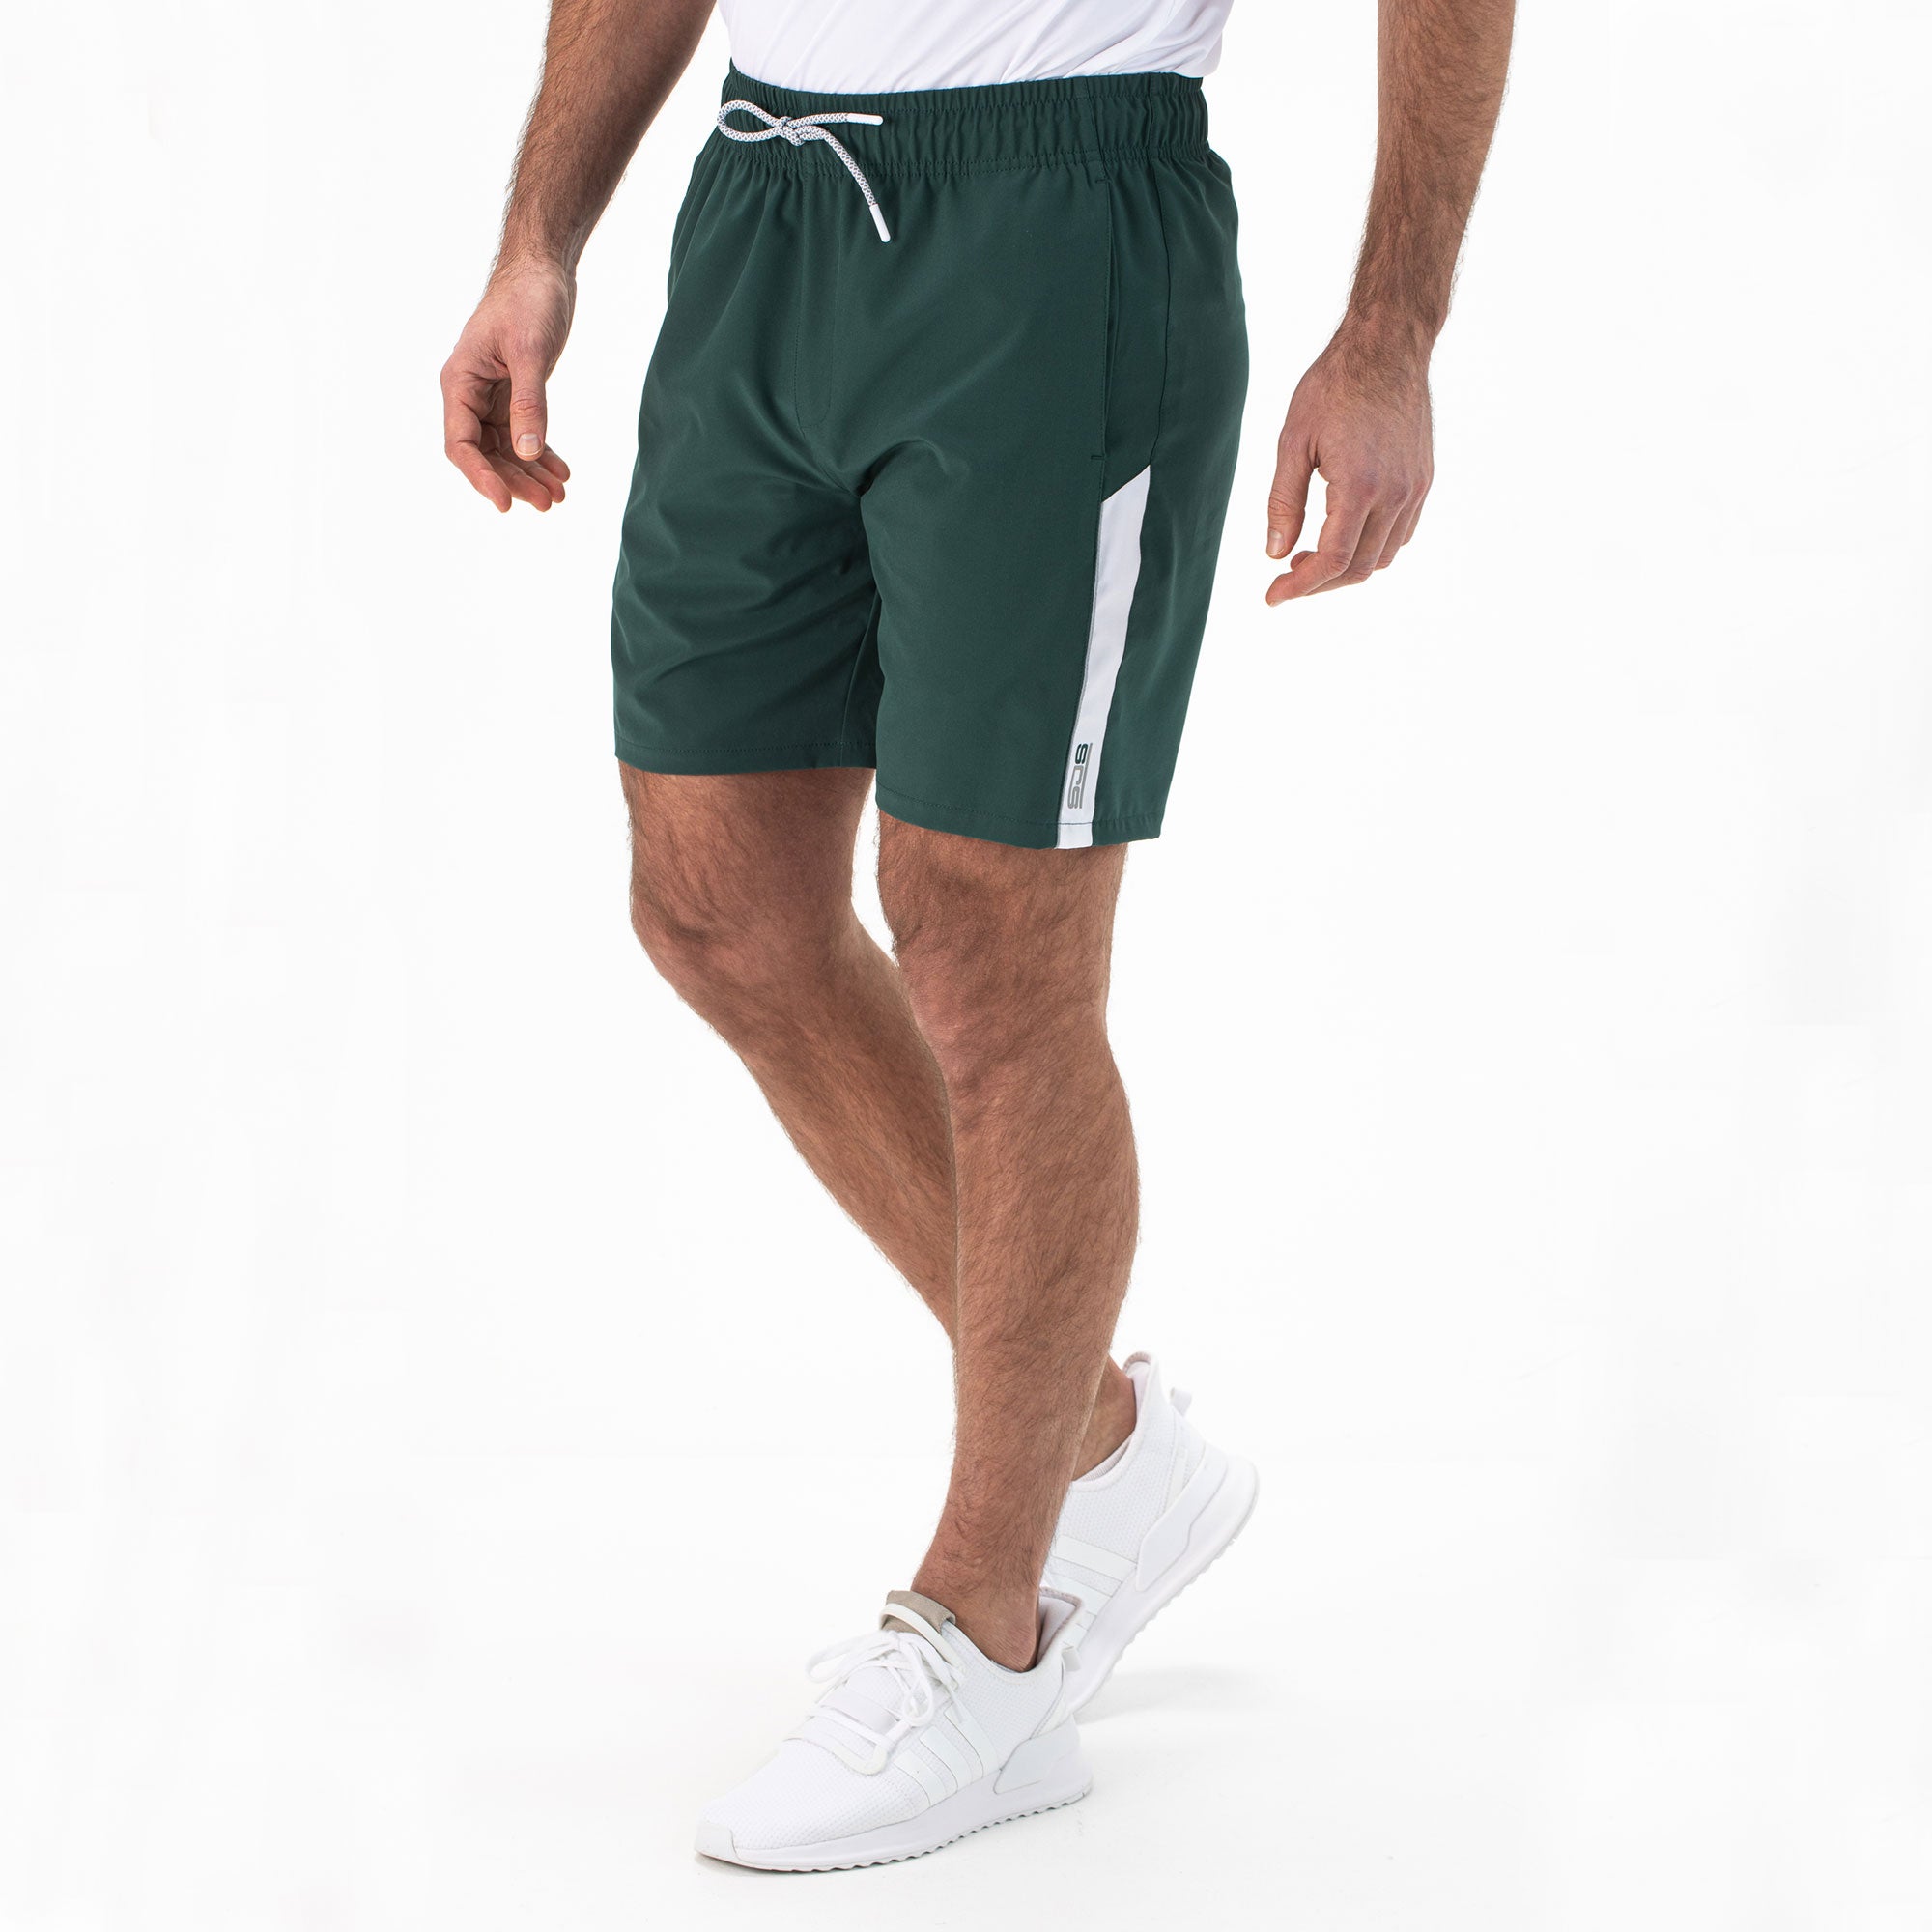 Sjeng Sports Evron Men's Tennis Shorts - Green (1)